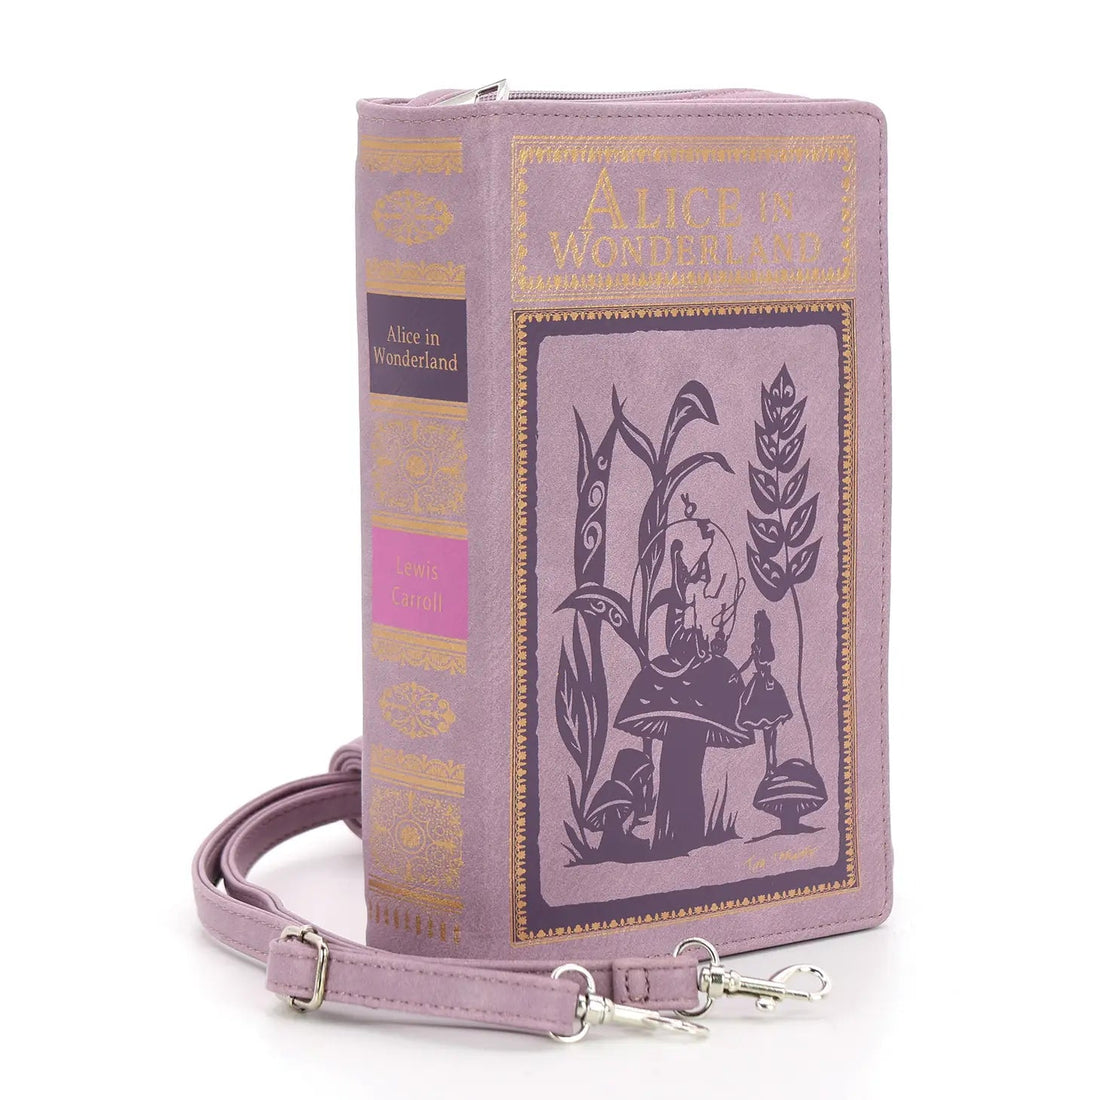 Shop Alice in Wonderland Book Clutch Bag in Vinyl - Premium Clutch Bag from Comeco INC Online now at Spoiled Brat 